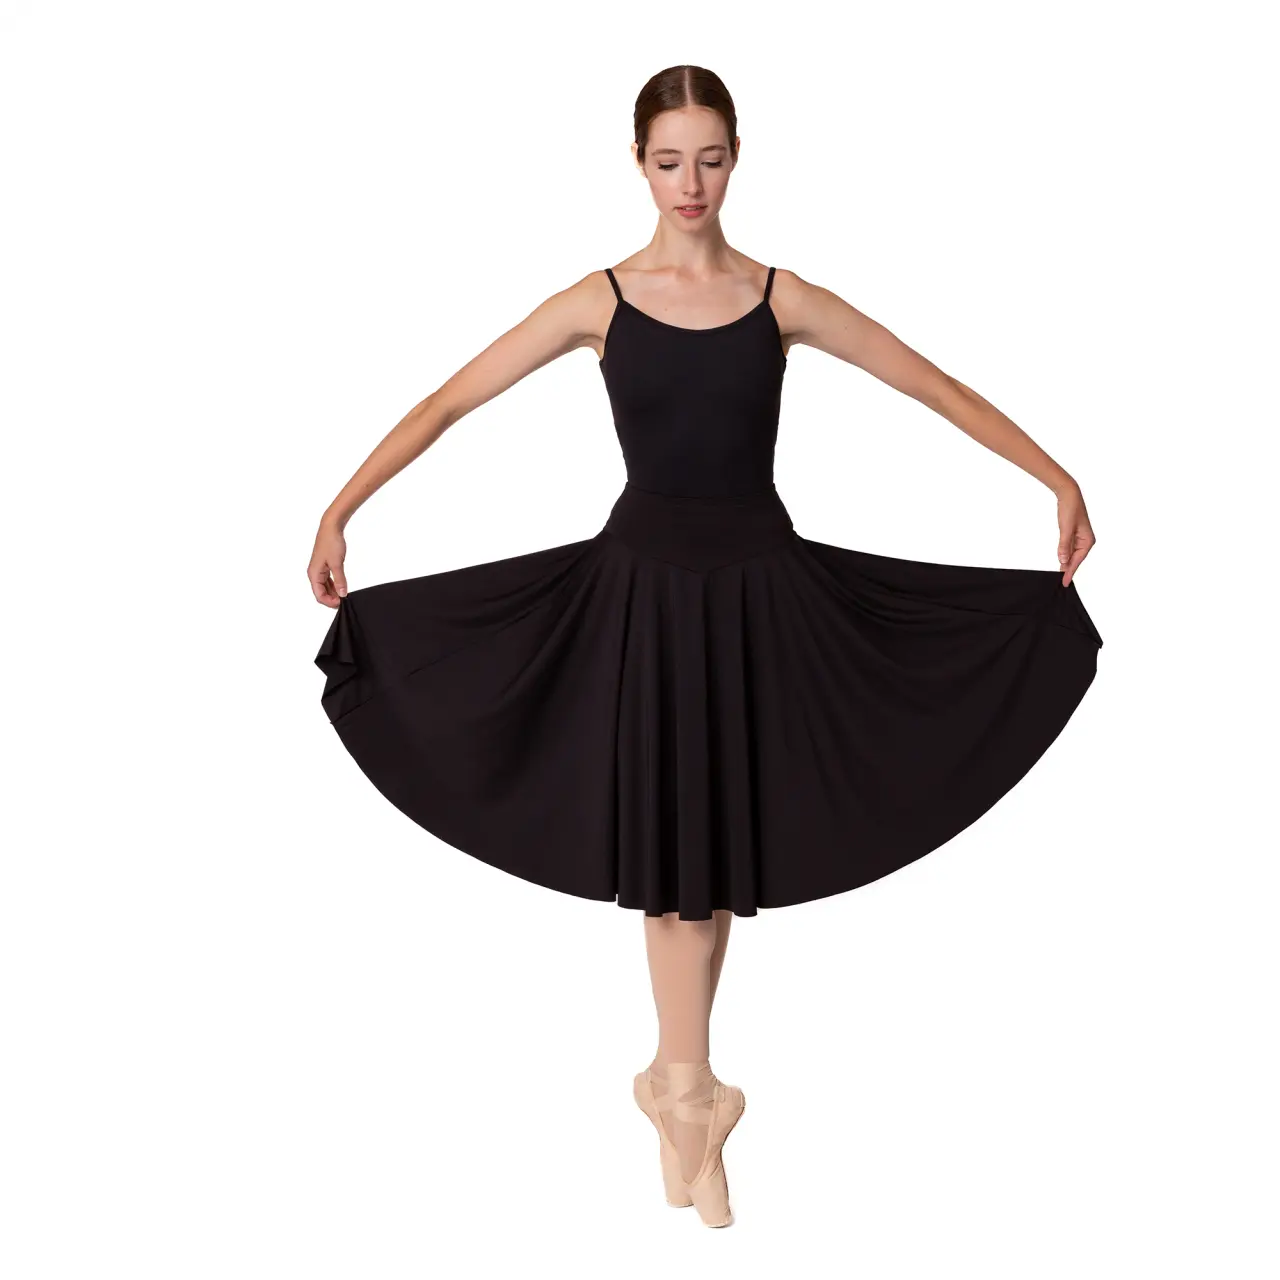 Bloch jupette danse,R5130 professionnal skirt dance